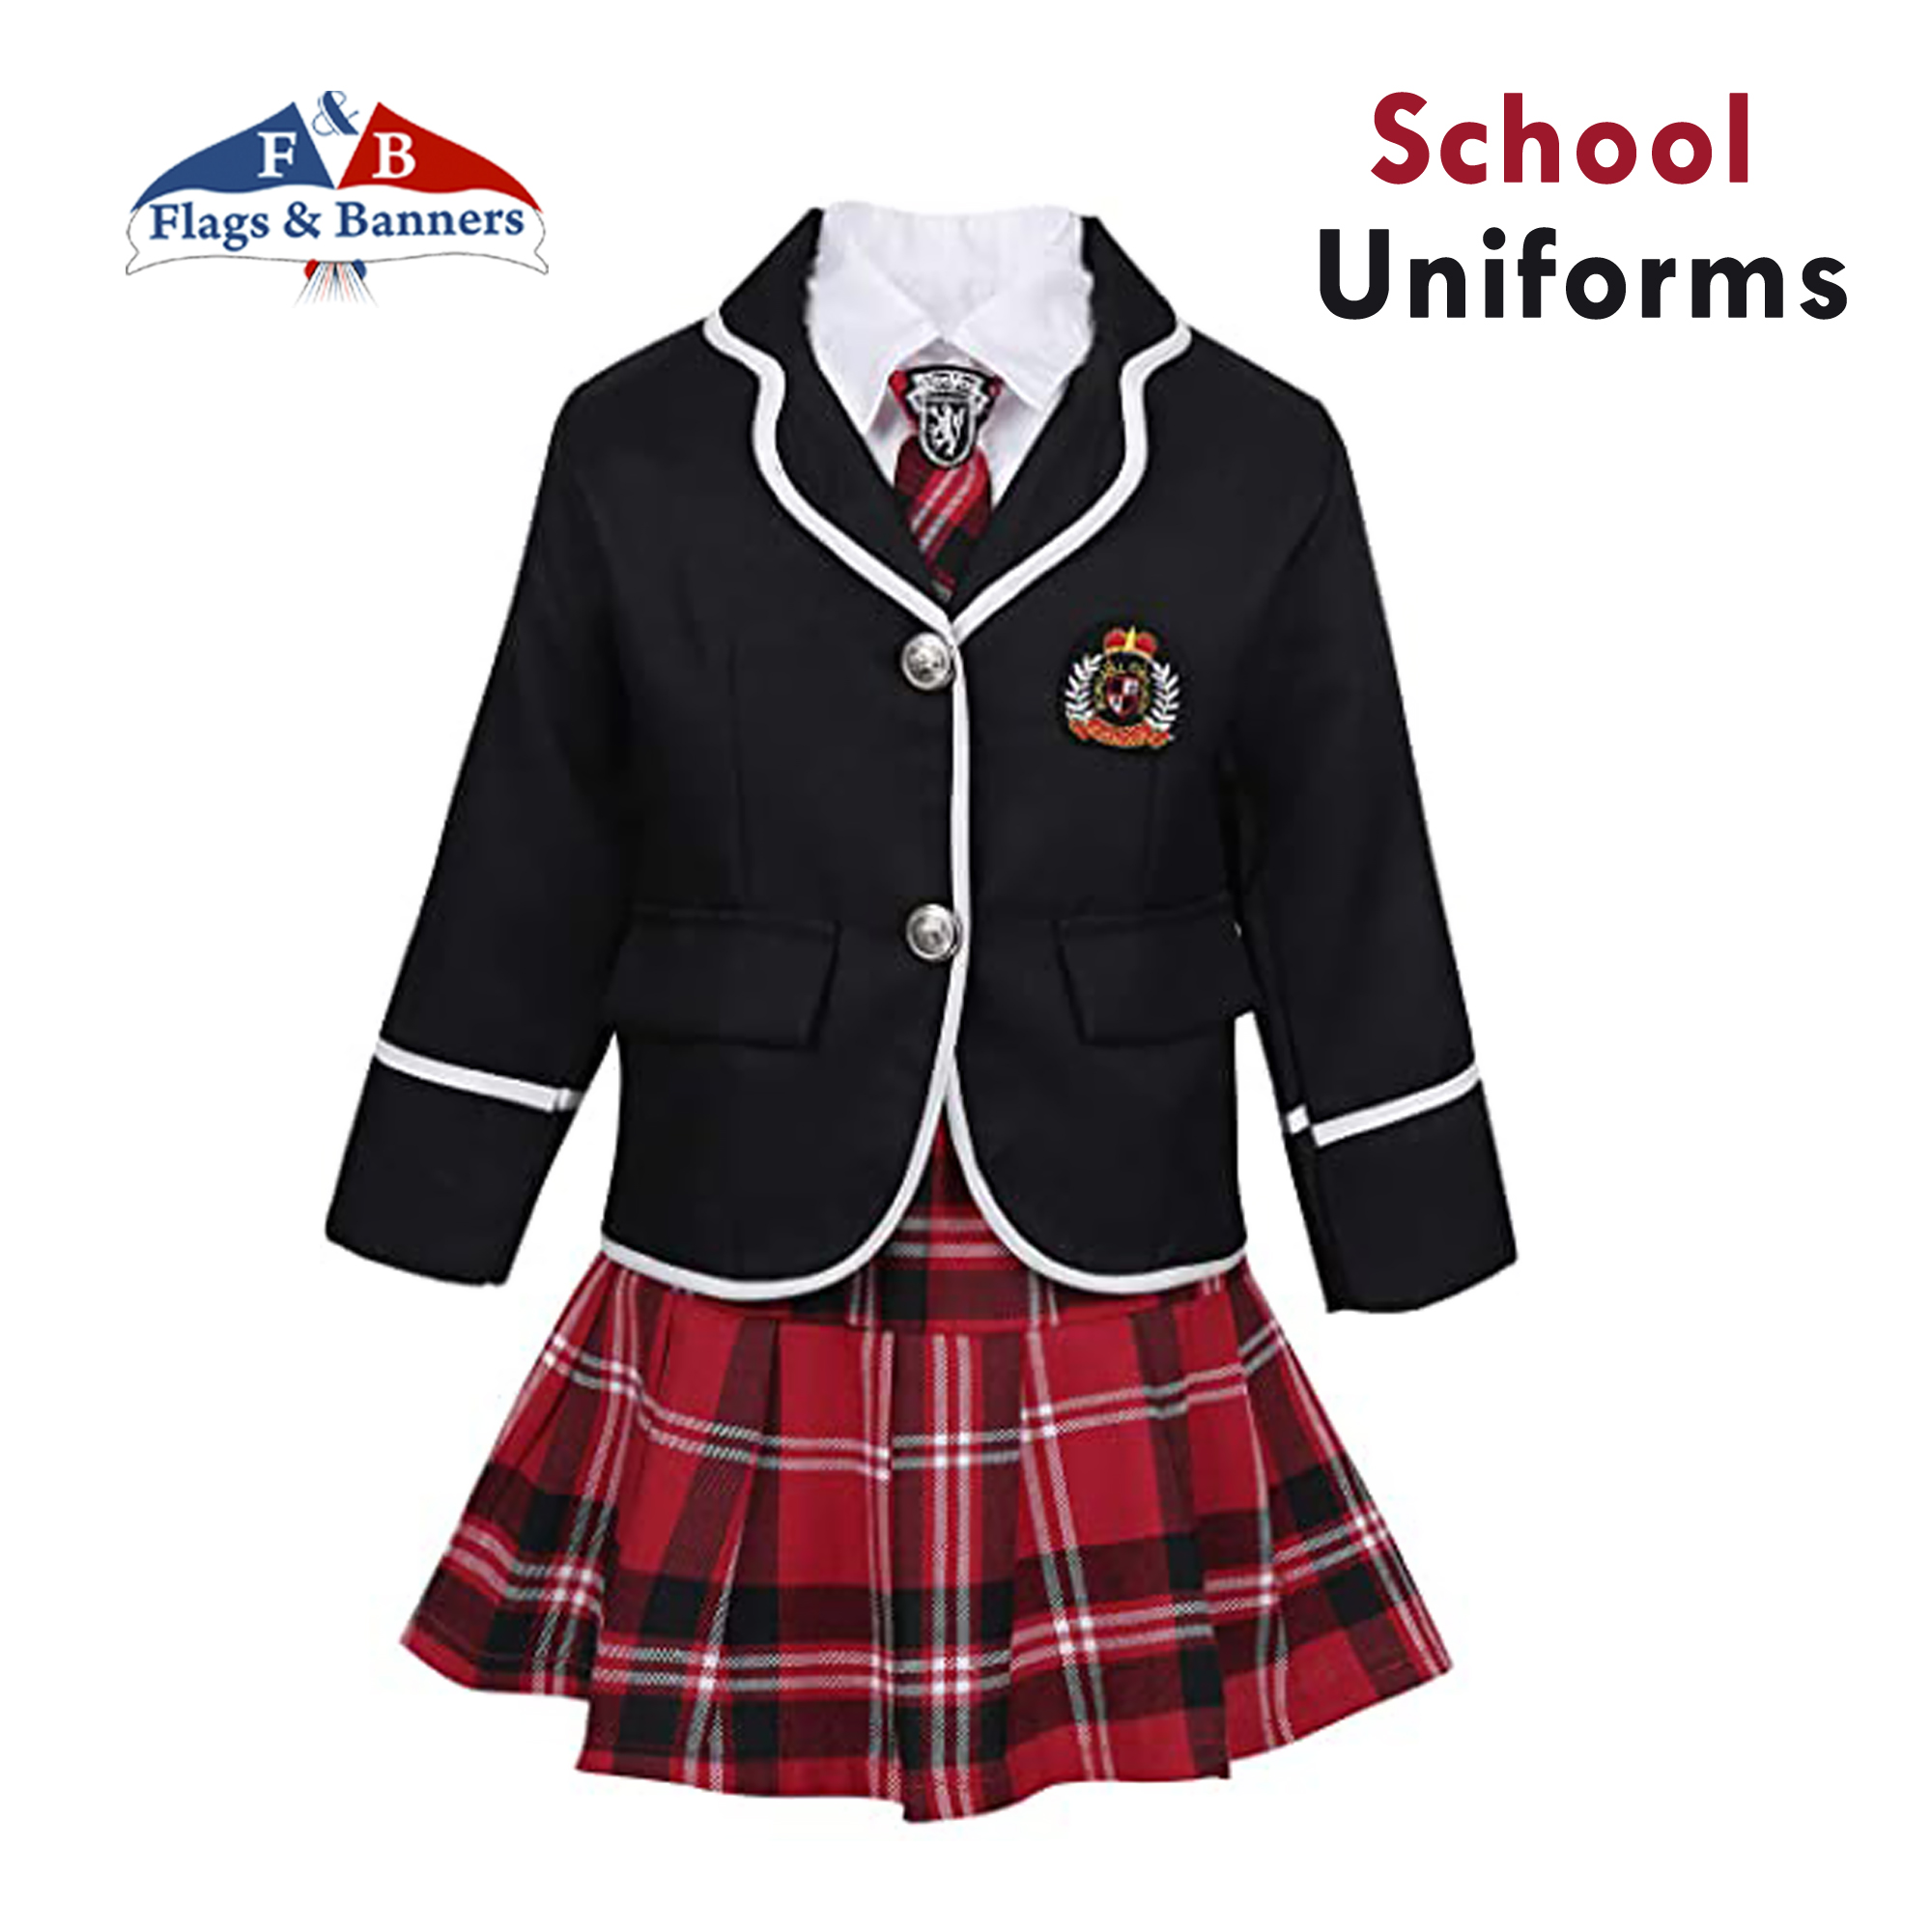 School Uniforms 02